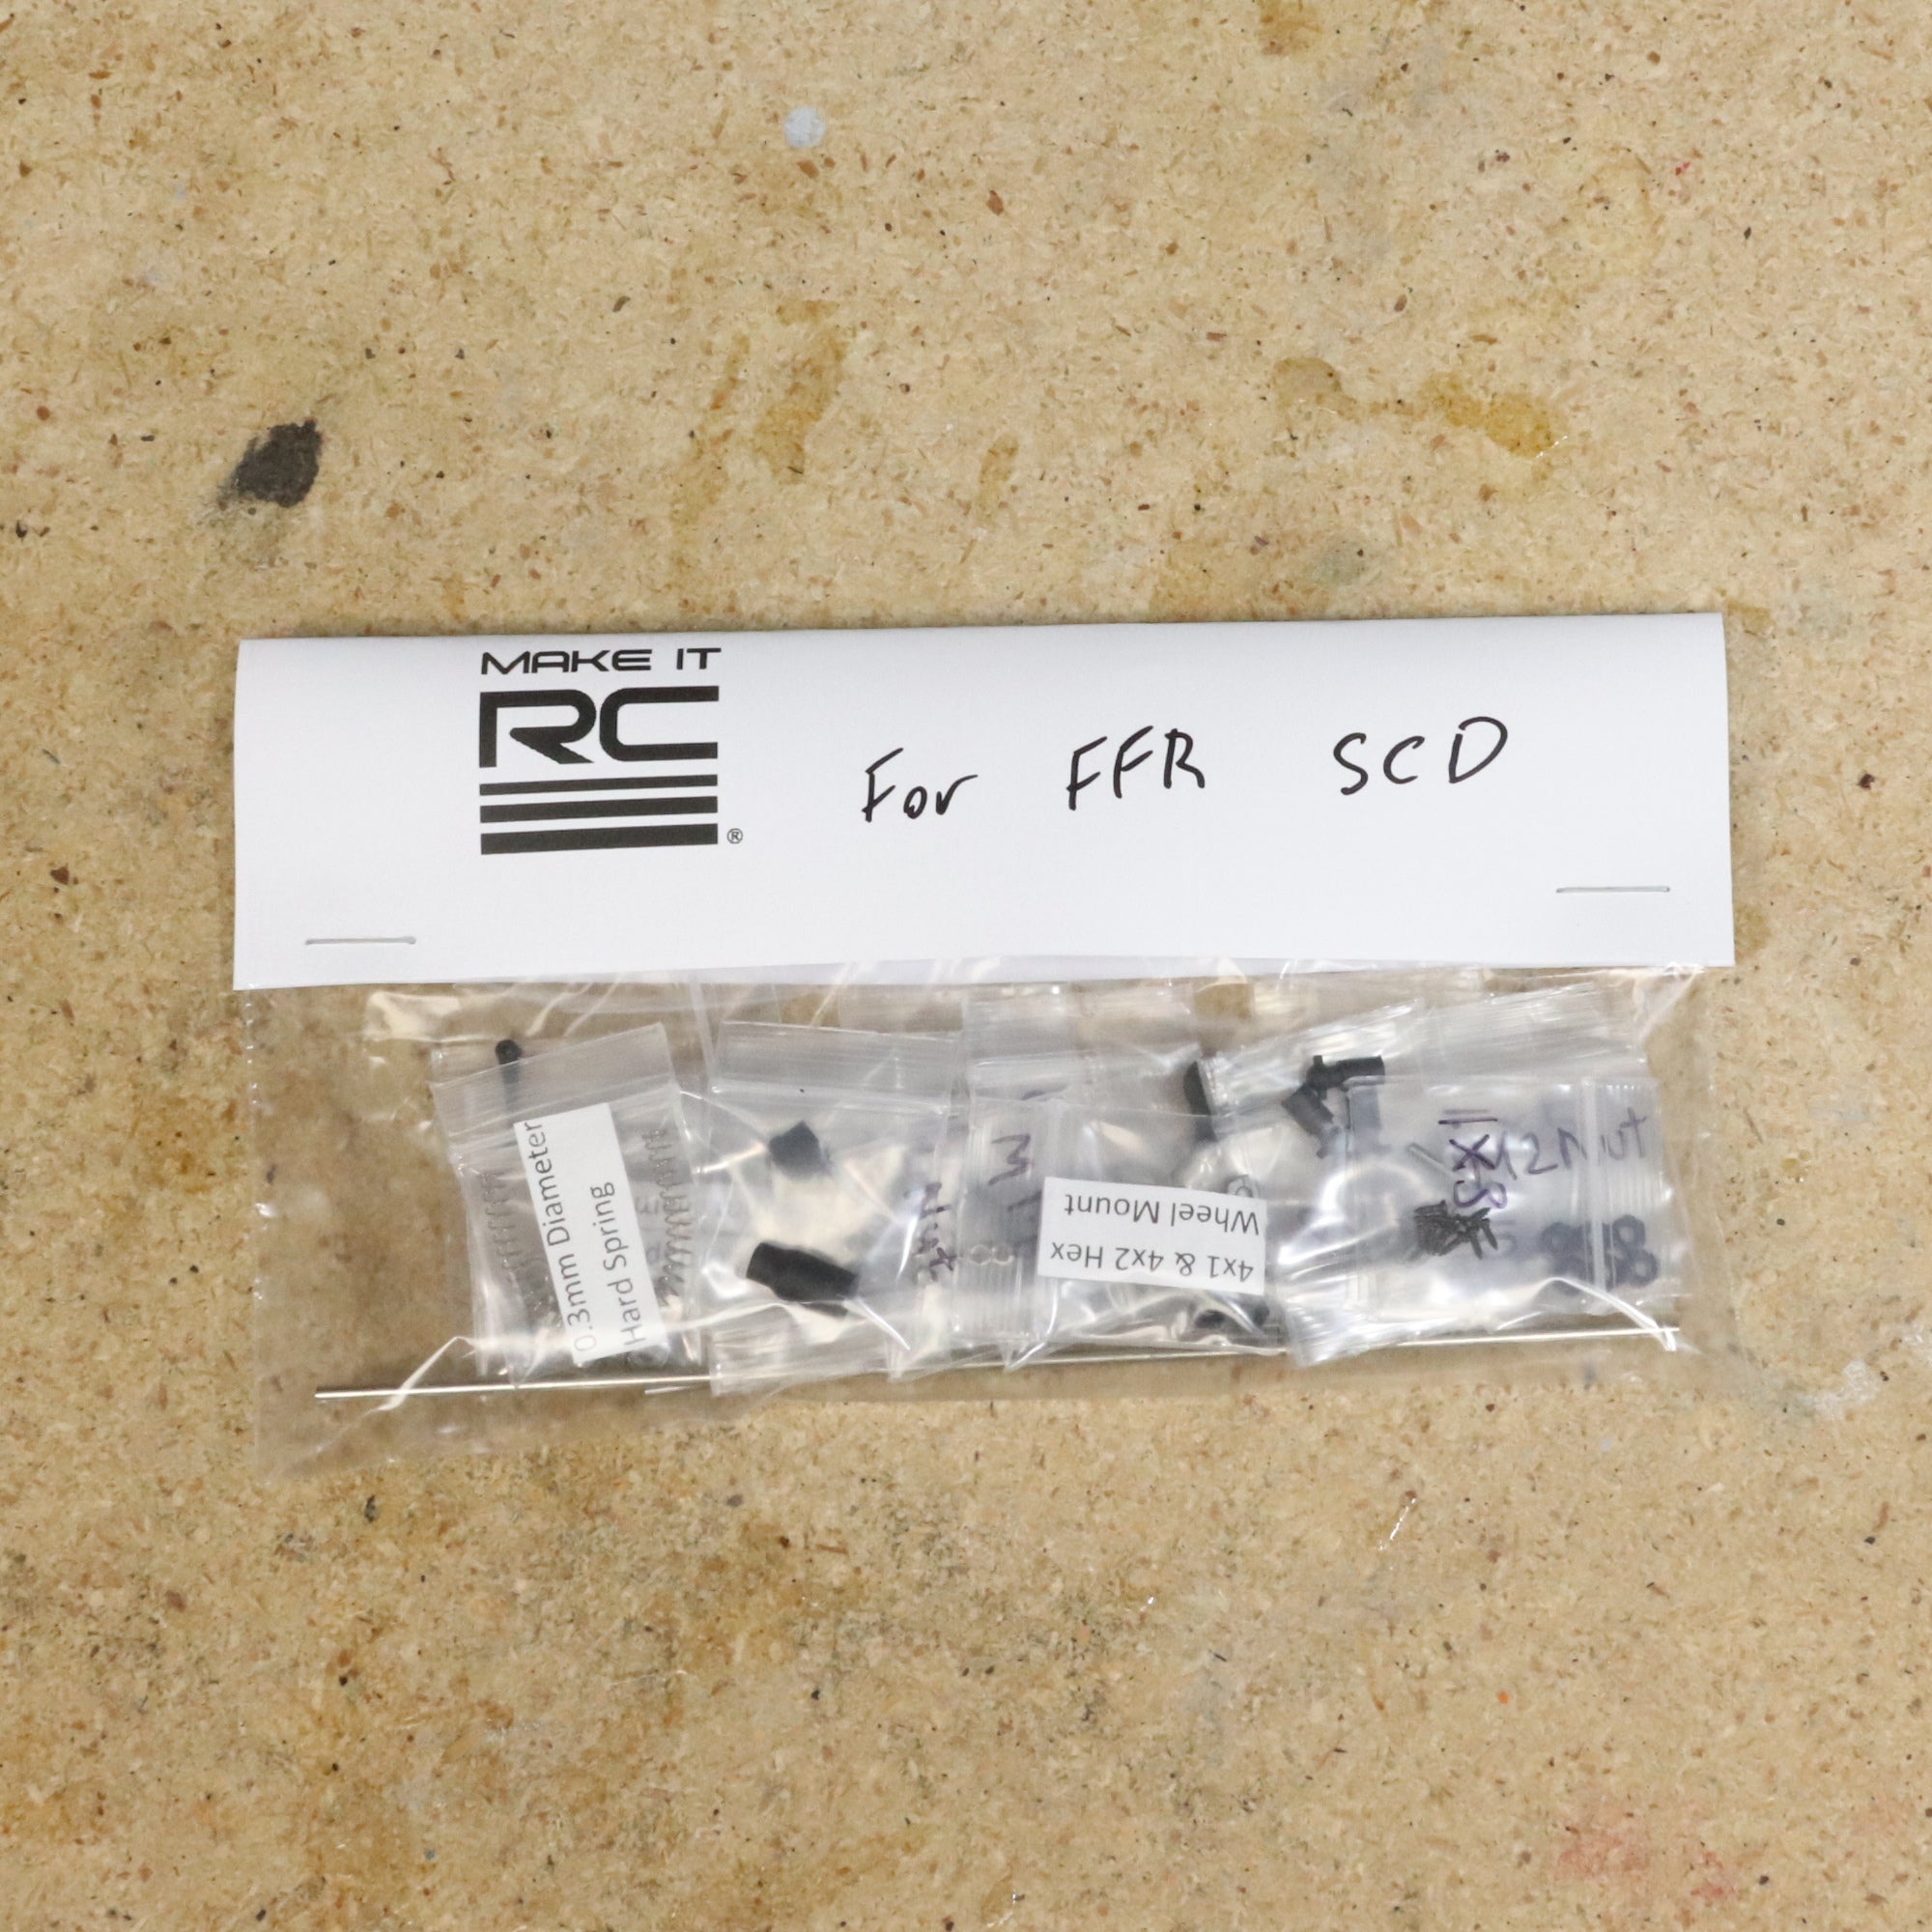 Hardware Kit for FFR SCD